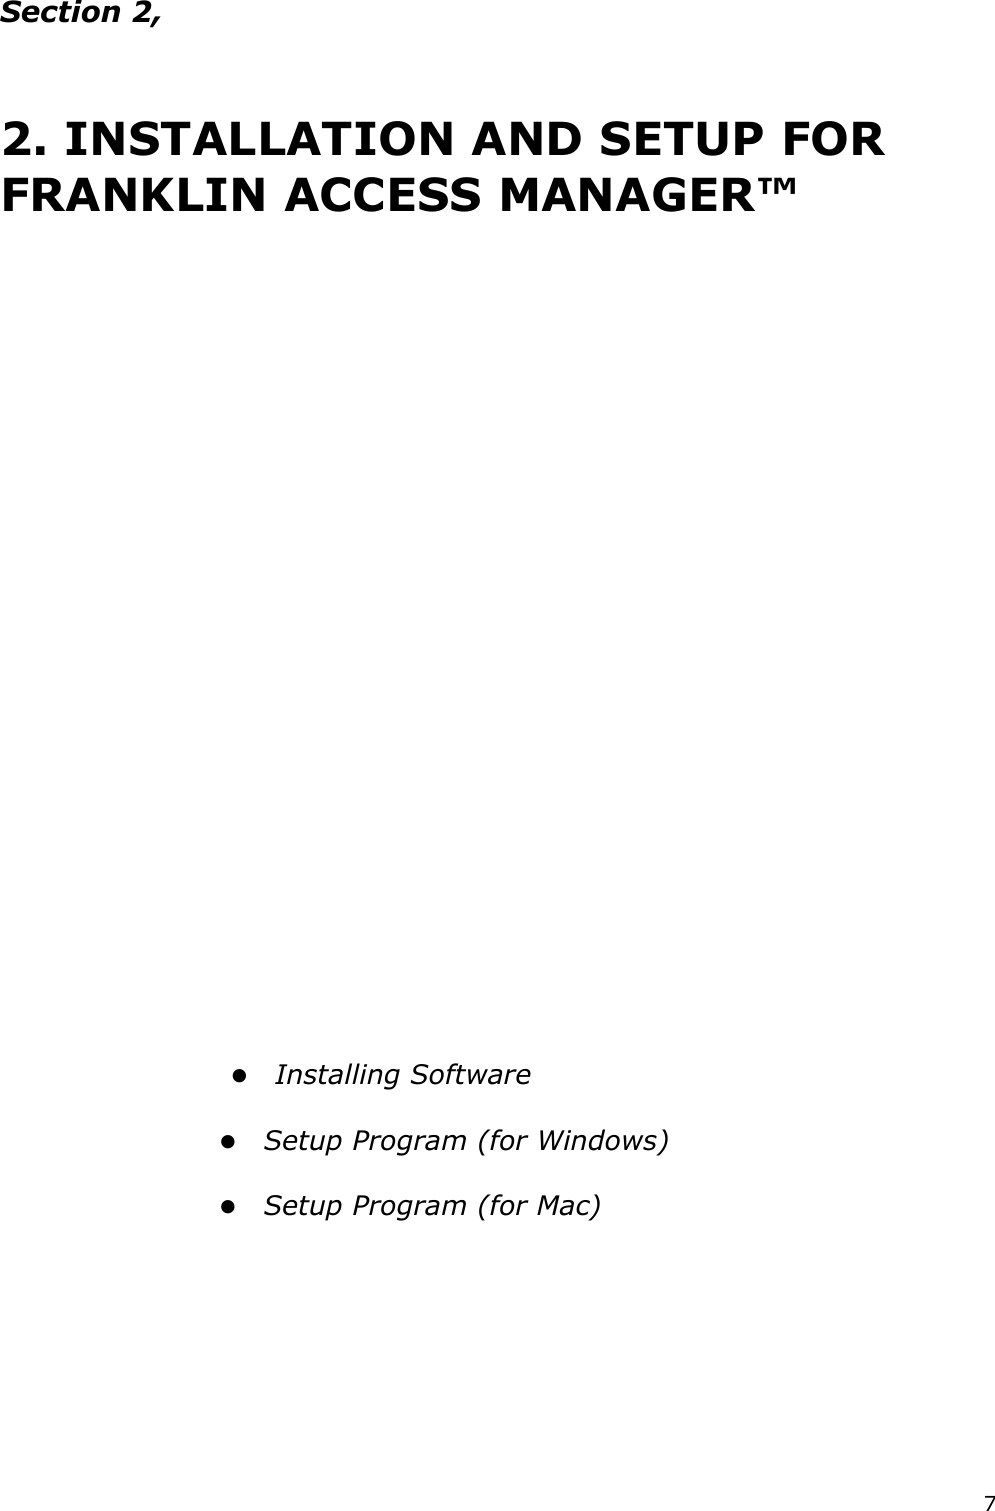 7  Section 2,            2. INSTALLATION AND SETUP FOR FRANKLIN ACCESS MANAGER™                                                                                               Installing Software     Setup Program (for Windows)     Setup Program (for Mac)                     